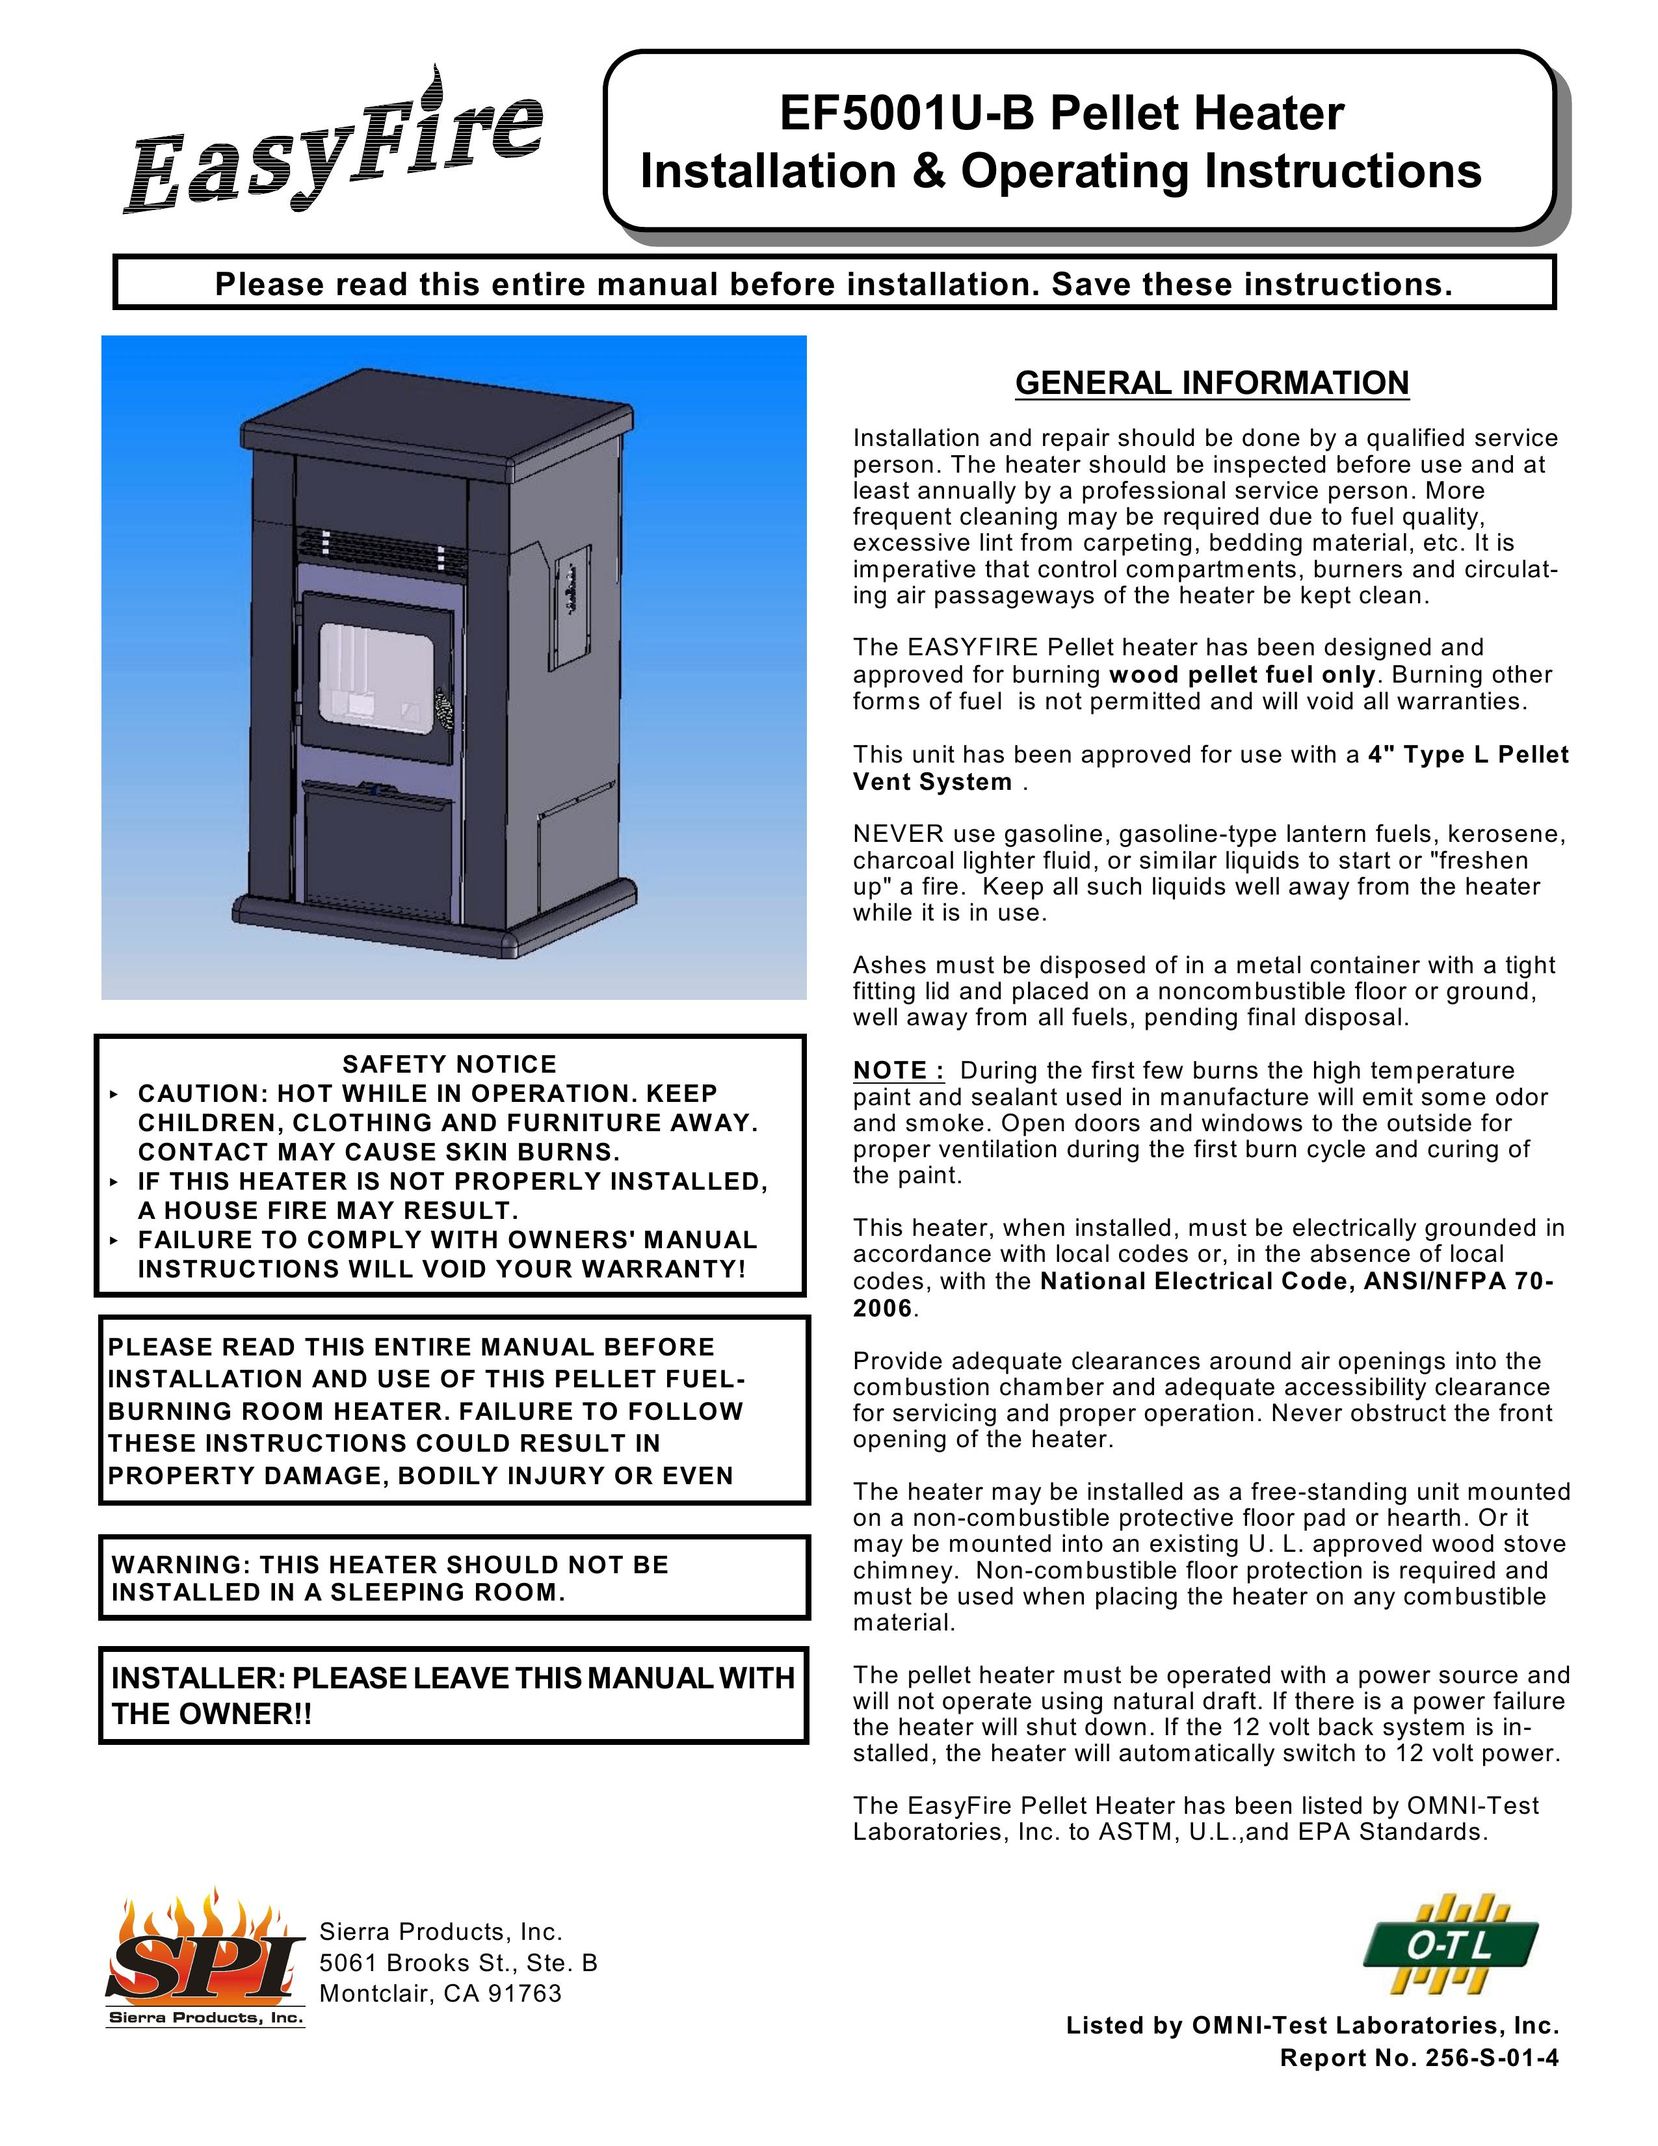 Sierra Products EF5001U Stove User Manual